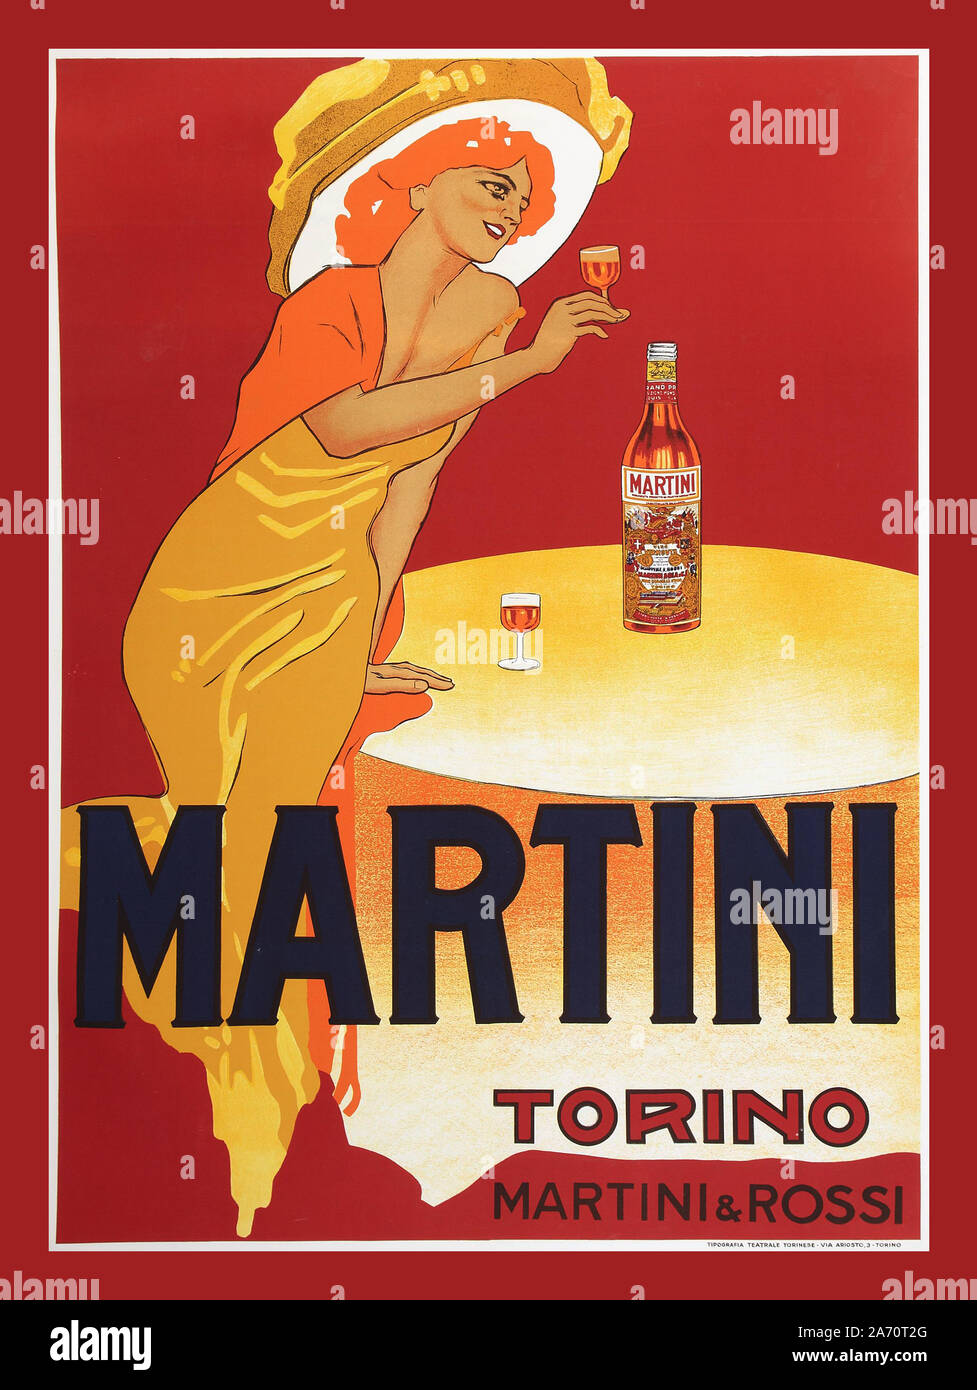 MARTINI 1900 affiche lithographique italienne Art déco Martini Vermouth Martini & Rossi boissons apéritif affiche ancienne, Tipografia Teatrale Torinese, Turin, Italie Banque D'Images